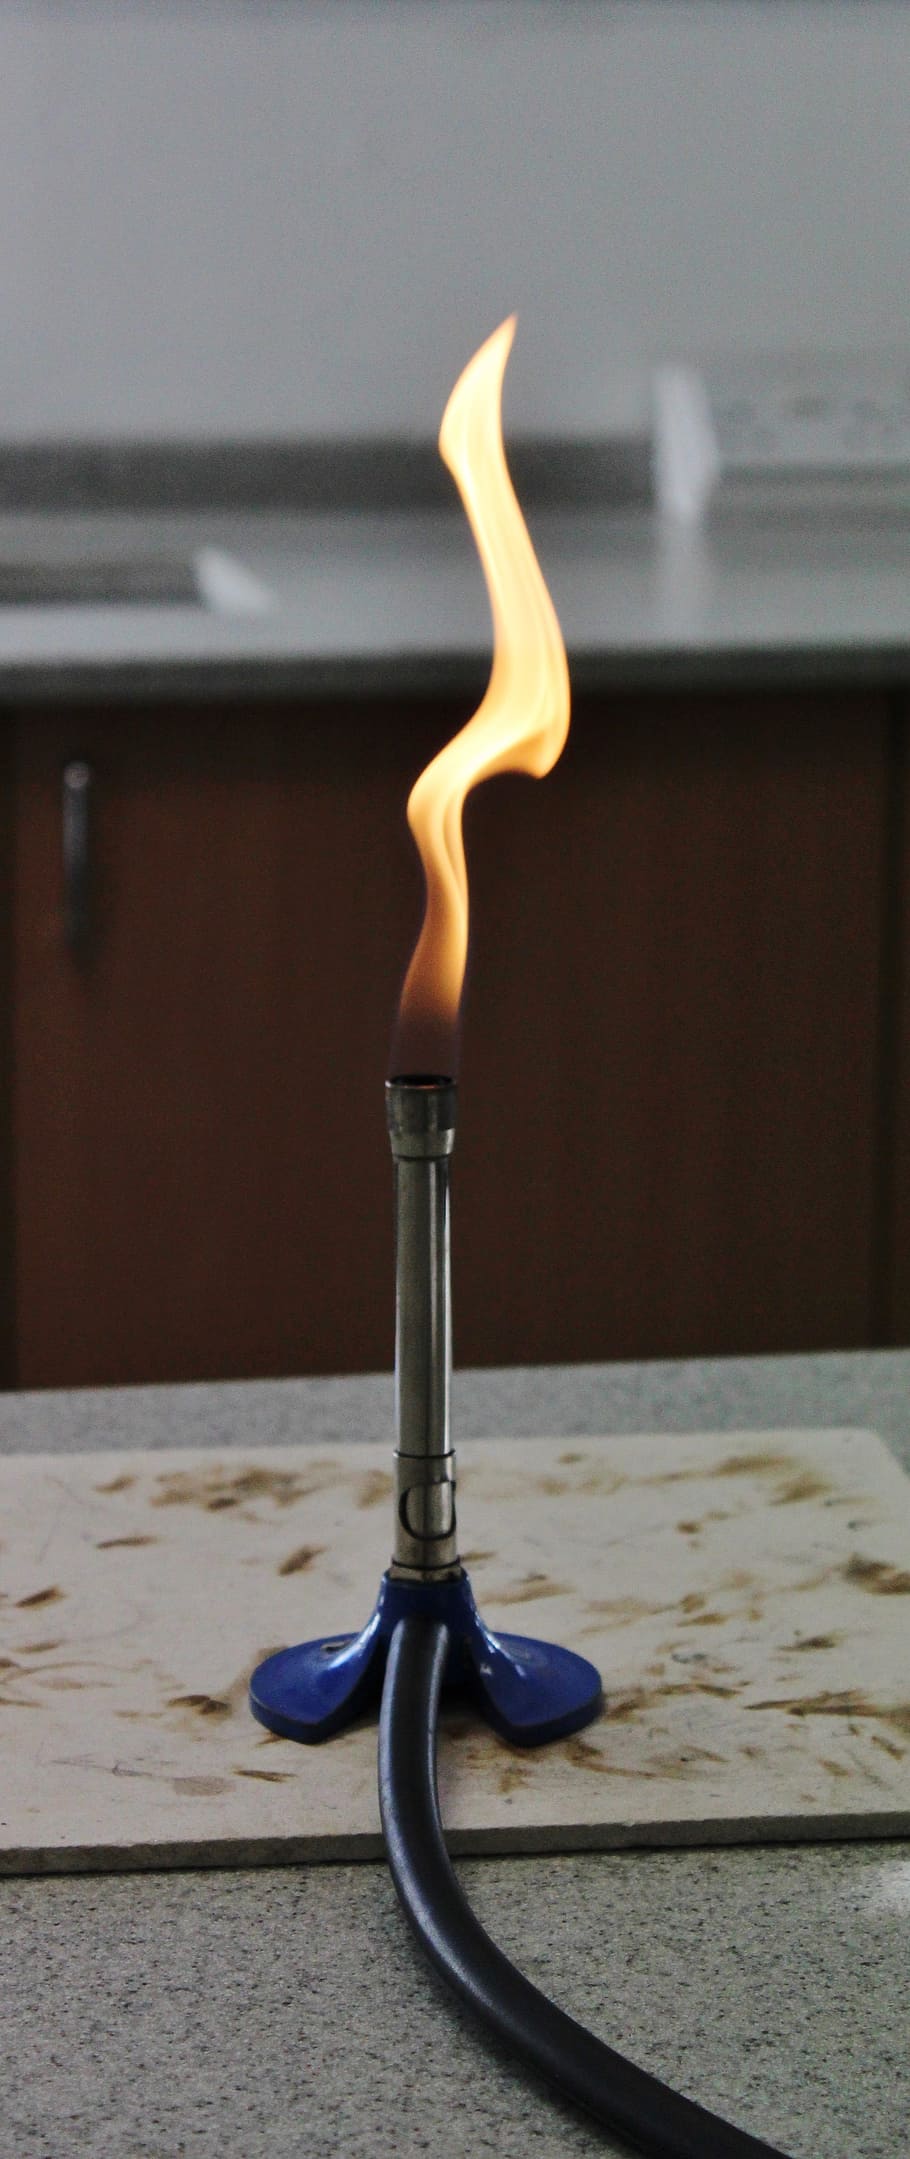 bunsen burner, flame, science, burner, bunsen, chemistry, fire, heat, burning, indoors